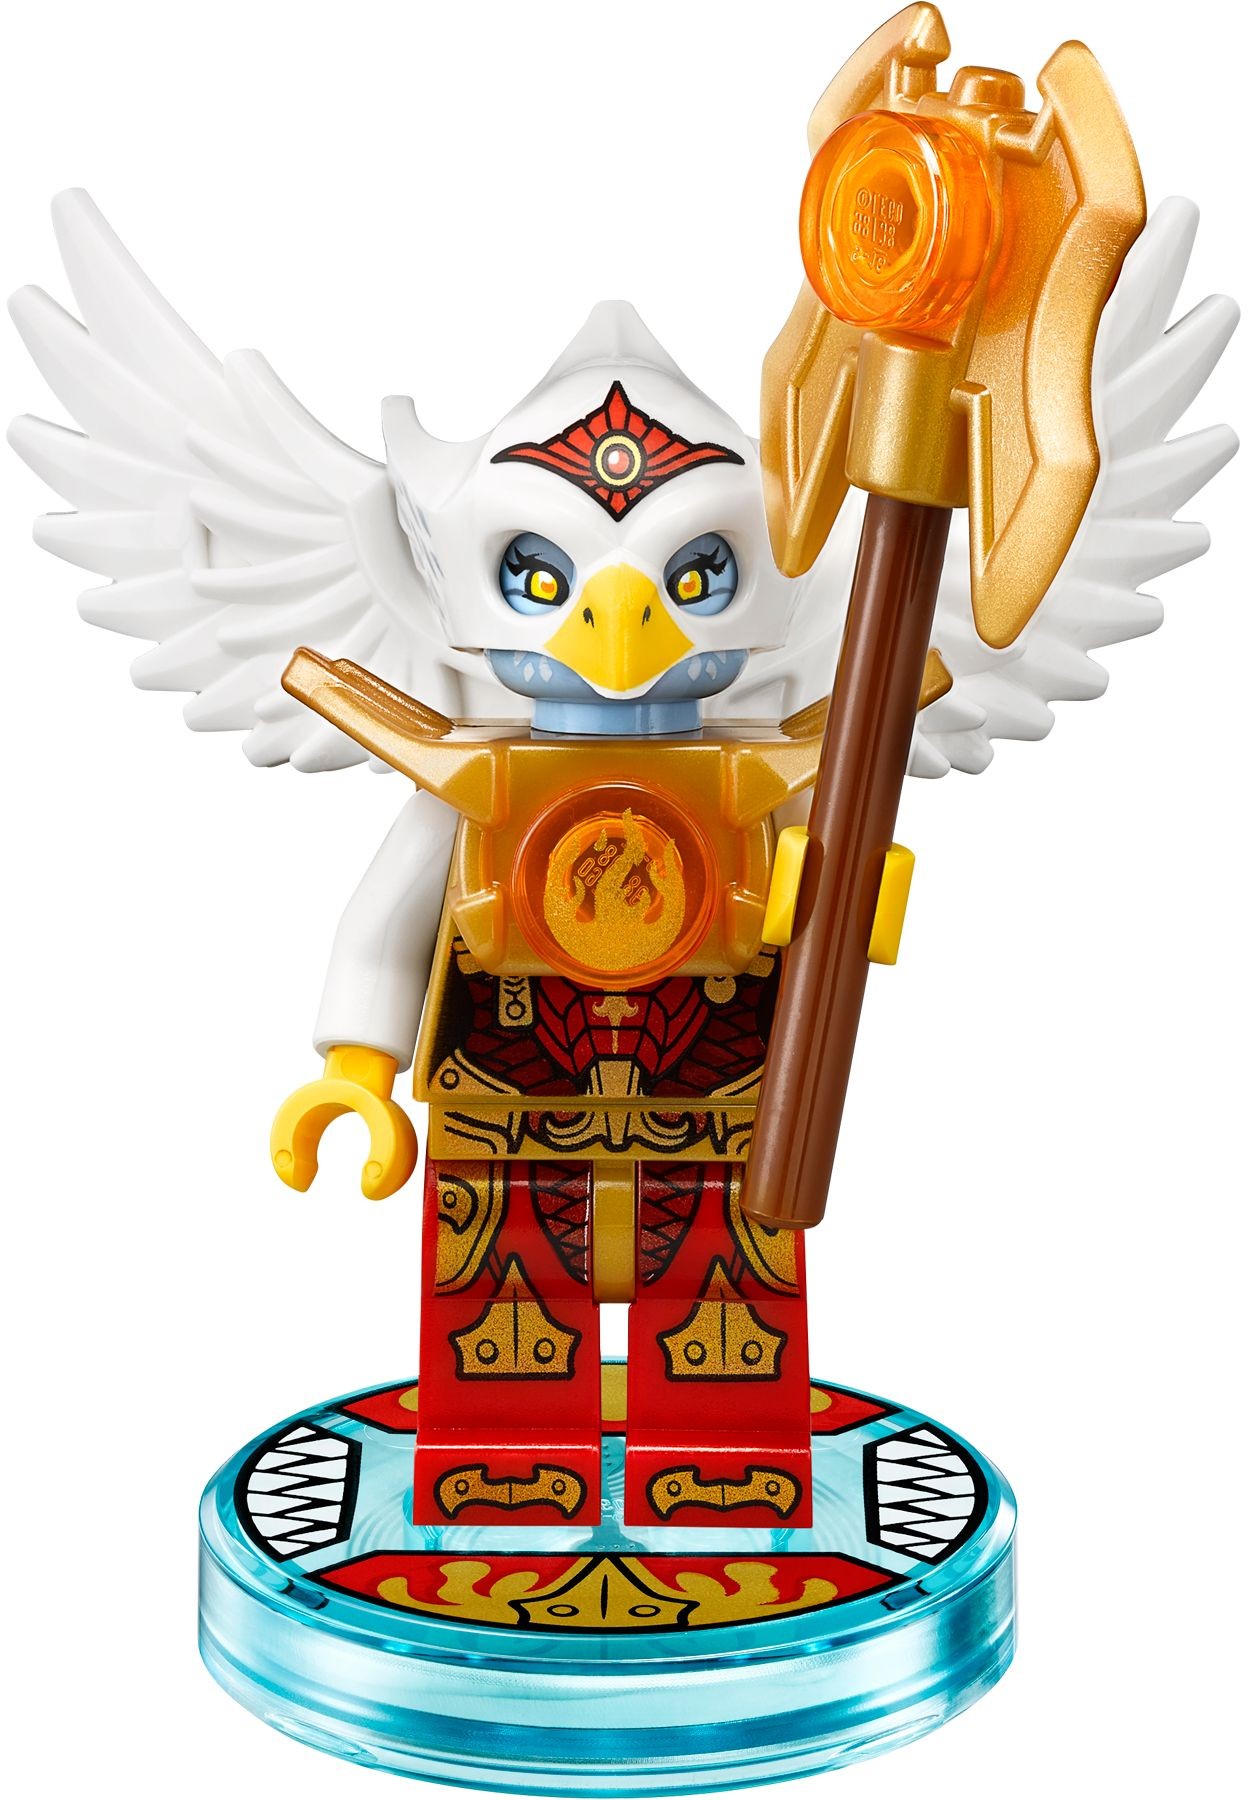 Download 71232: LEGO® Dimensions Legends of Chima™ Eris Fun Pack - Klickbricks